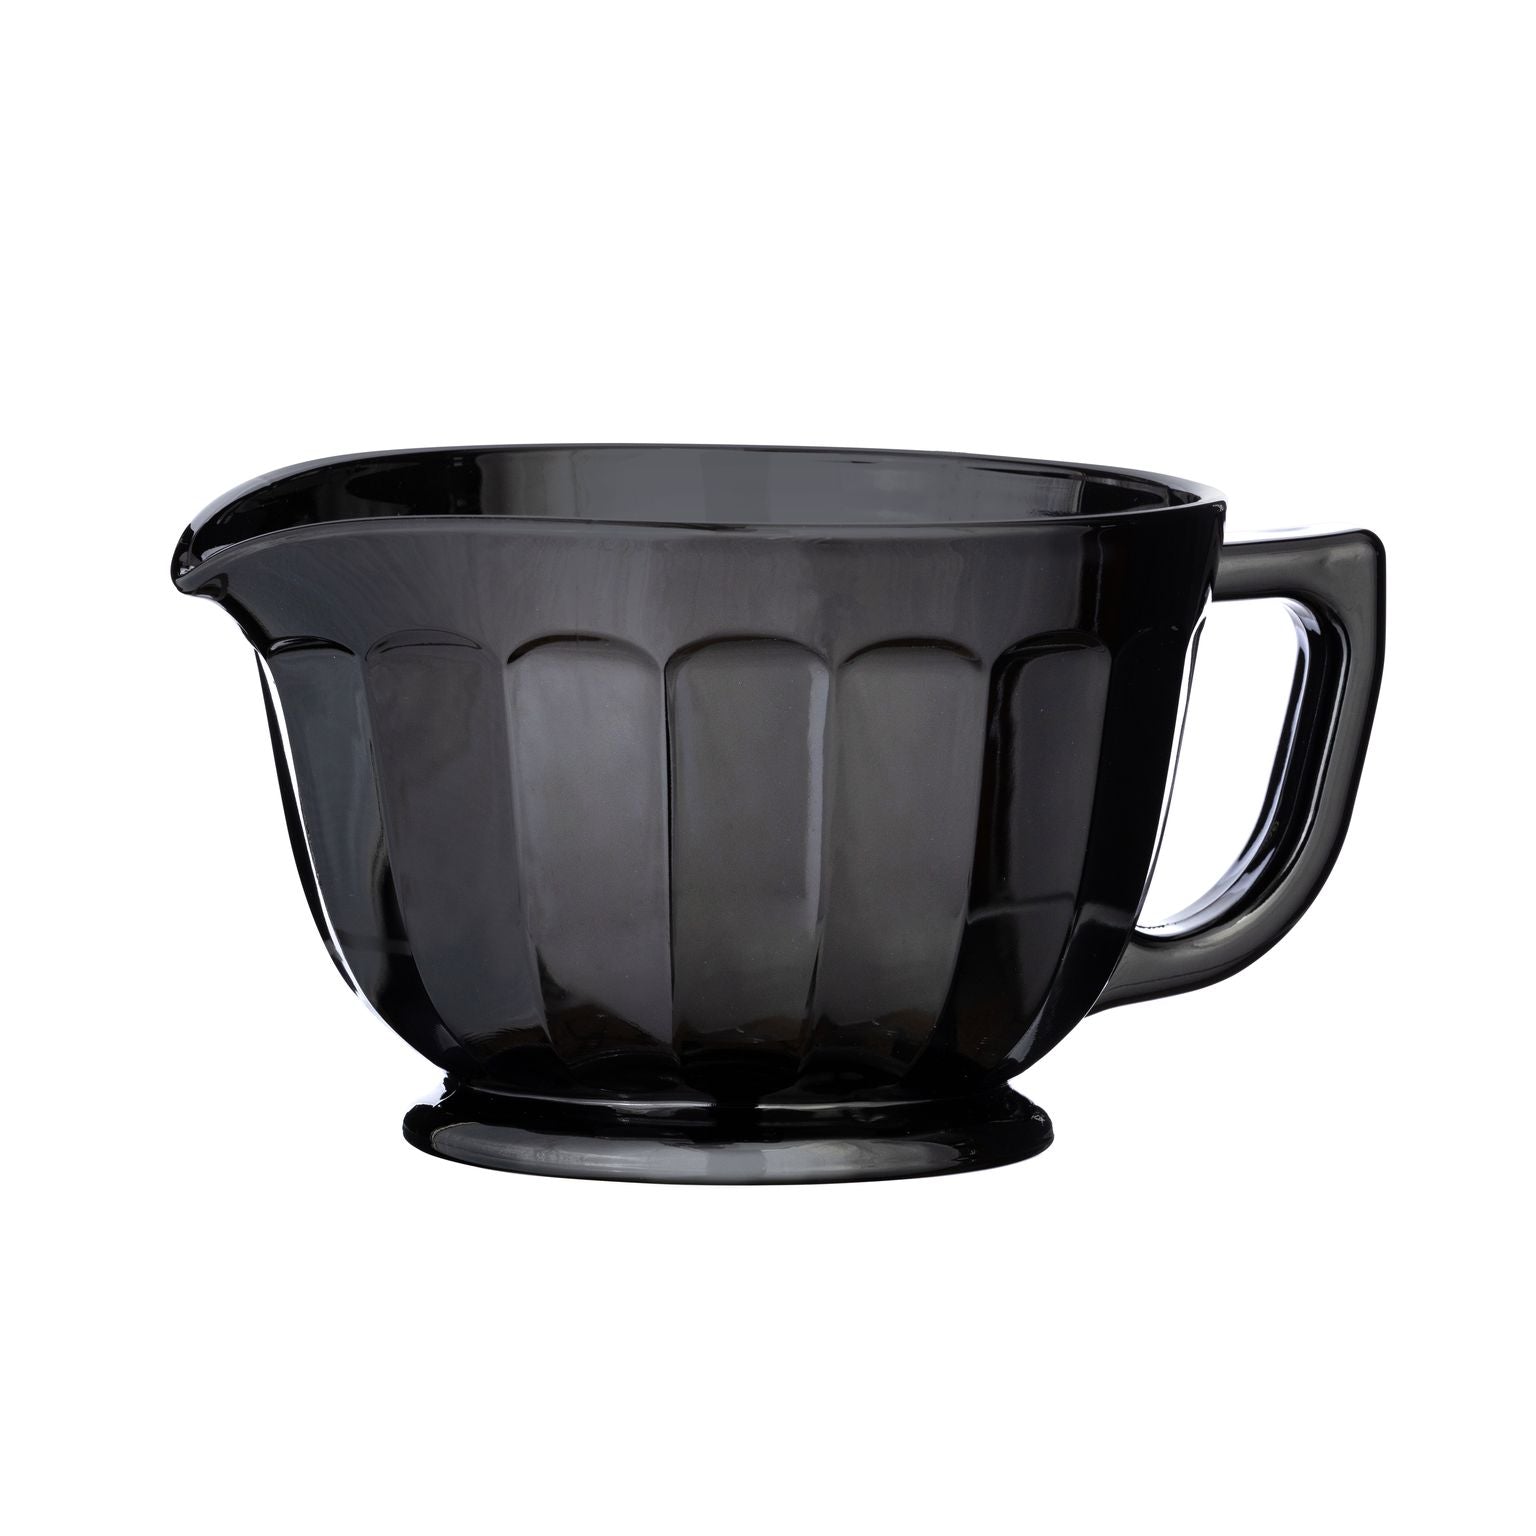 Shop American-Made Glass Batter Bowls, Kitchen Essentials